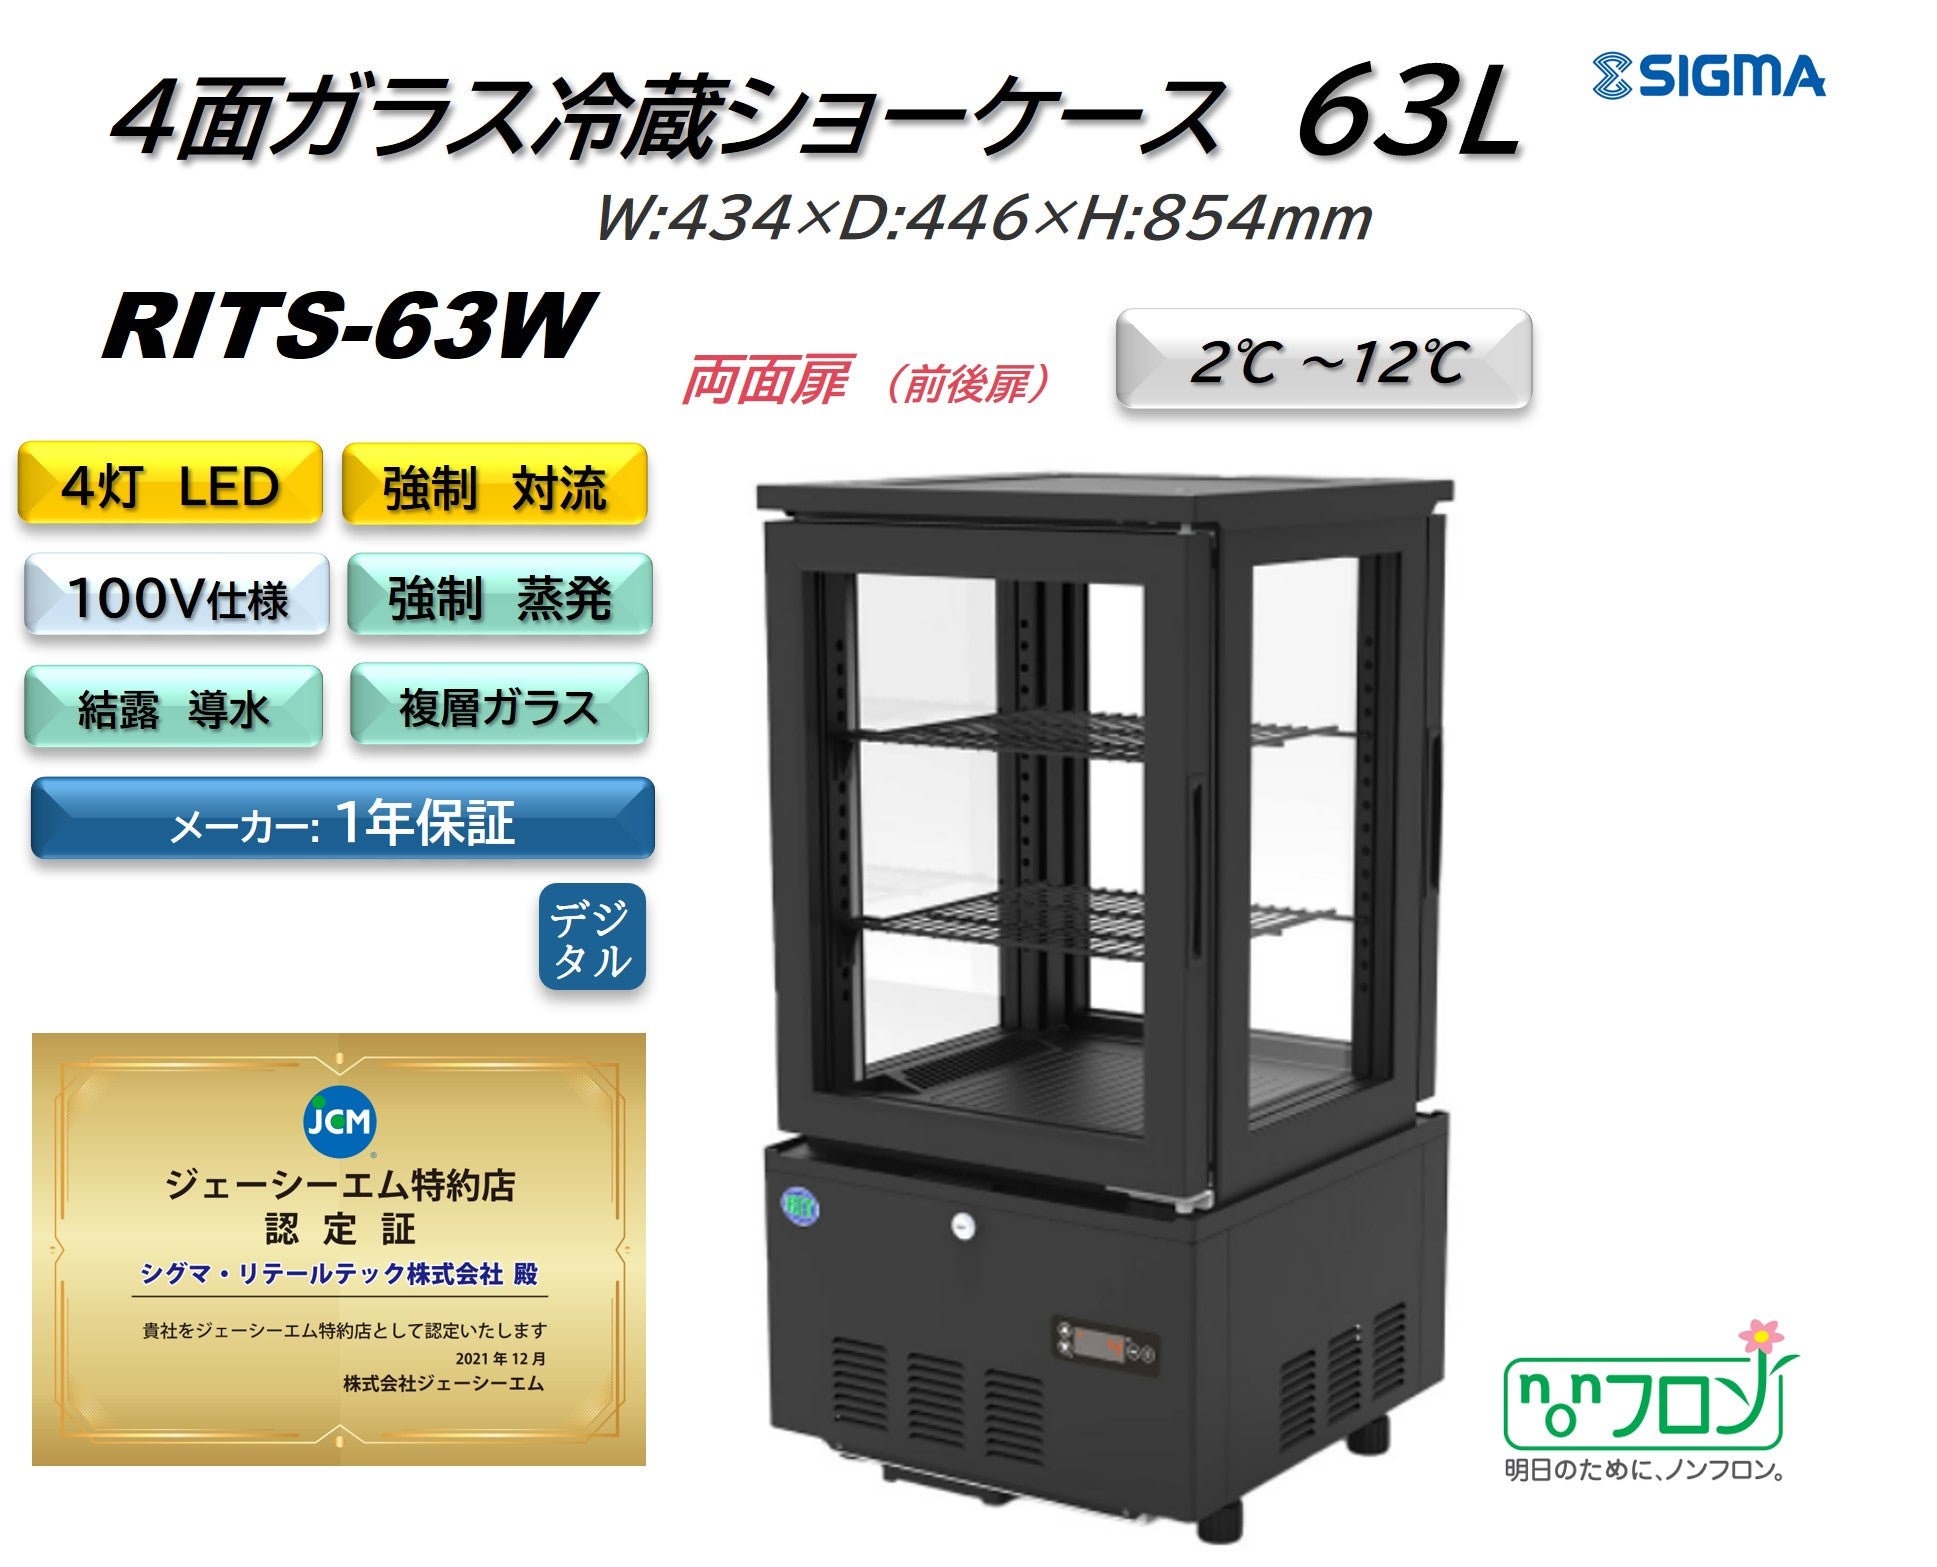 RITS-63W 4面ガラス冷蔵ショーケース／幅434×奥行446×高さ854mm